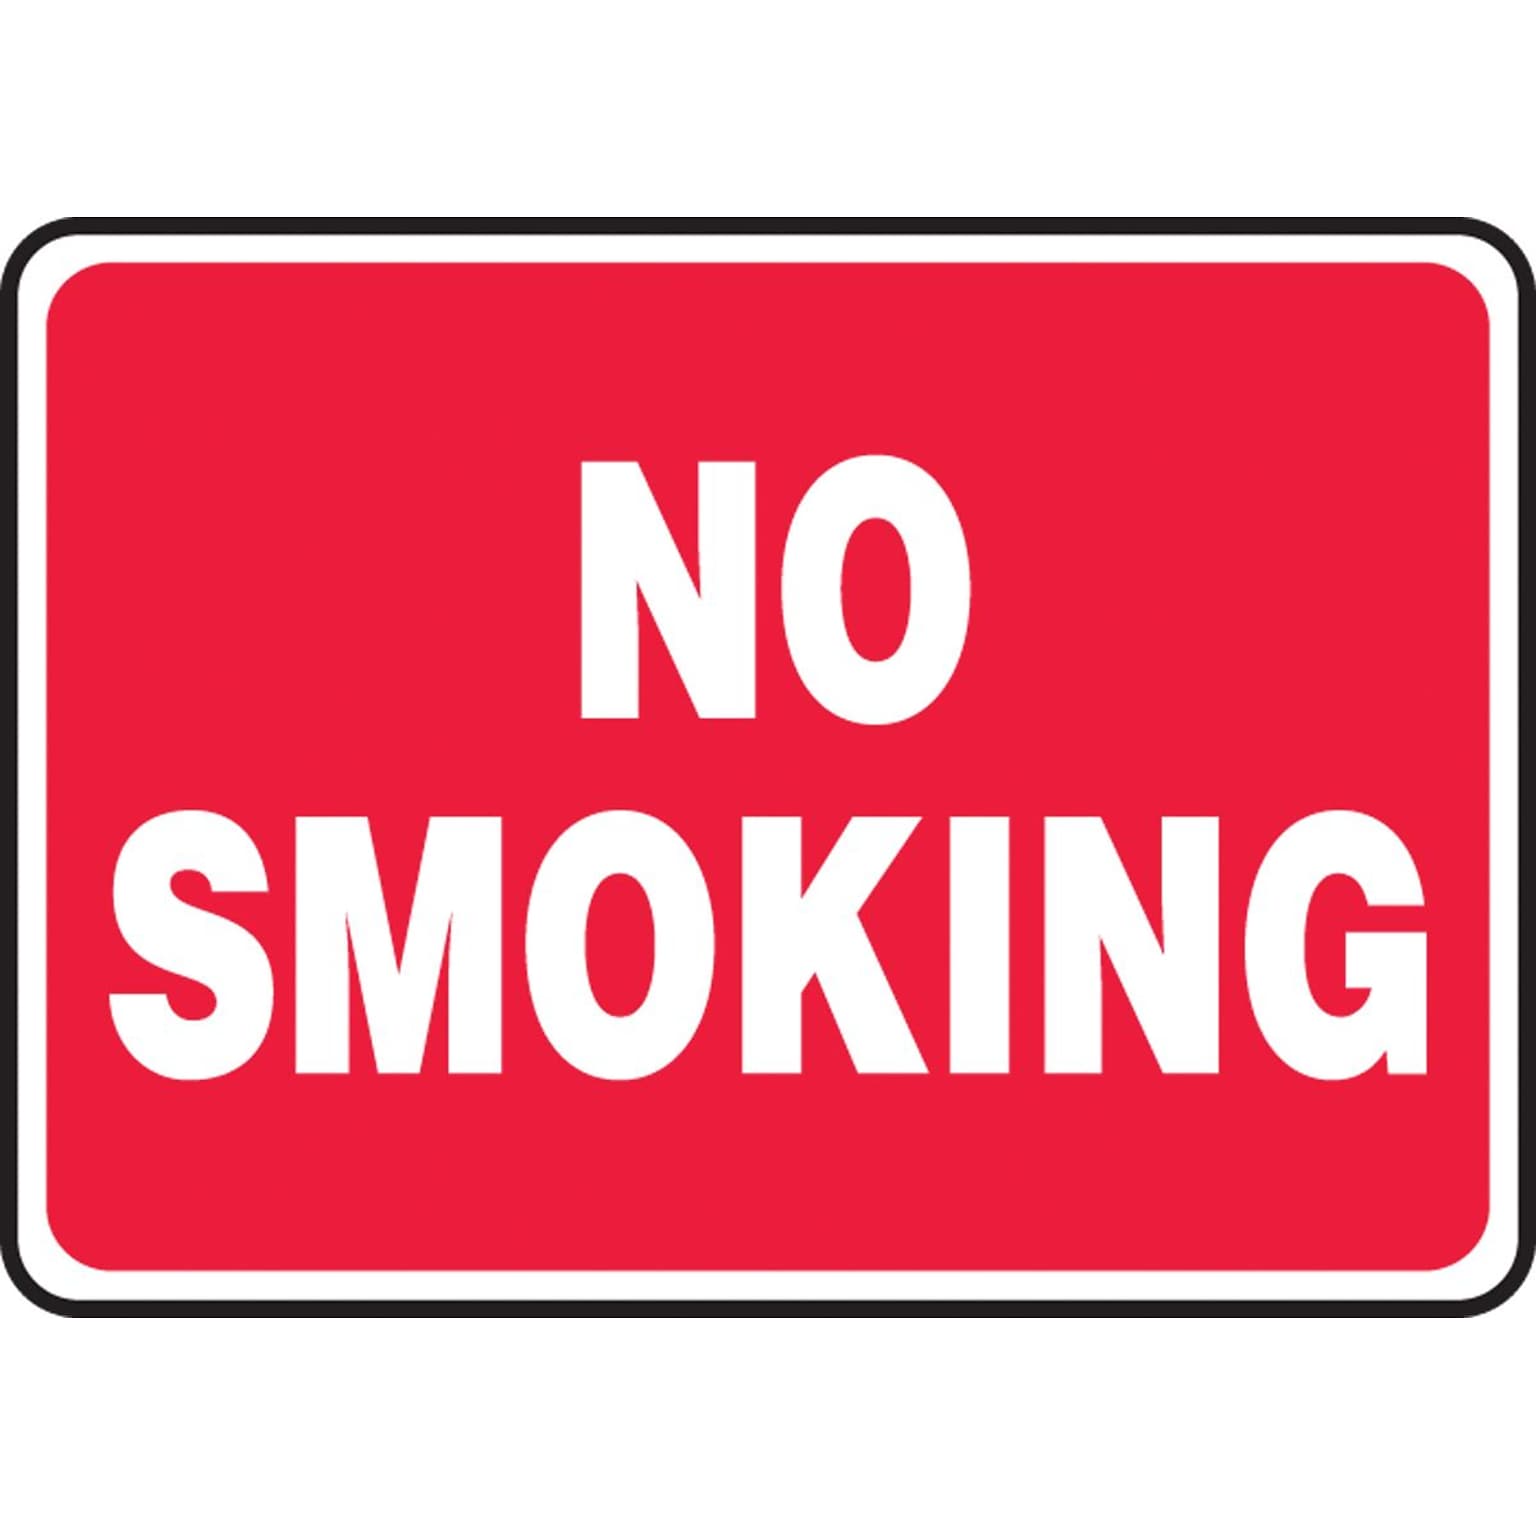 Accuform 7 x 10 Plastic Smoking Control Sign NO SMOKING, White On Red (MSMK423VP)